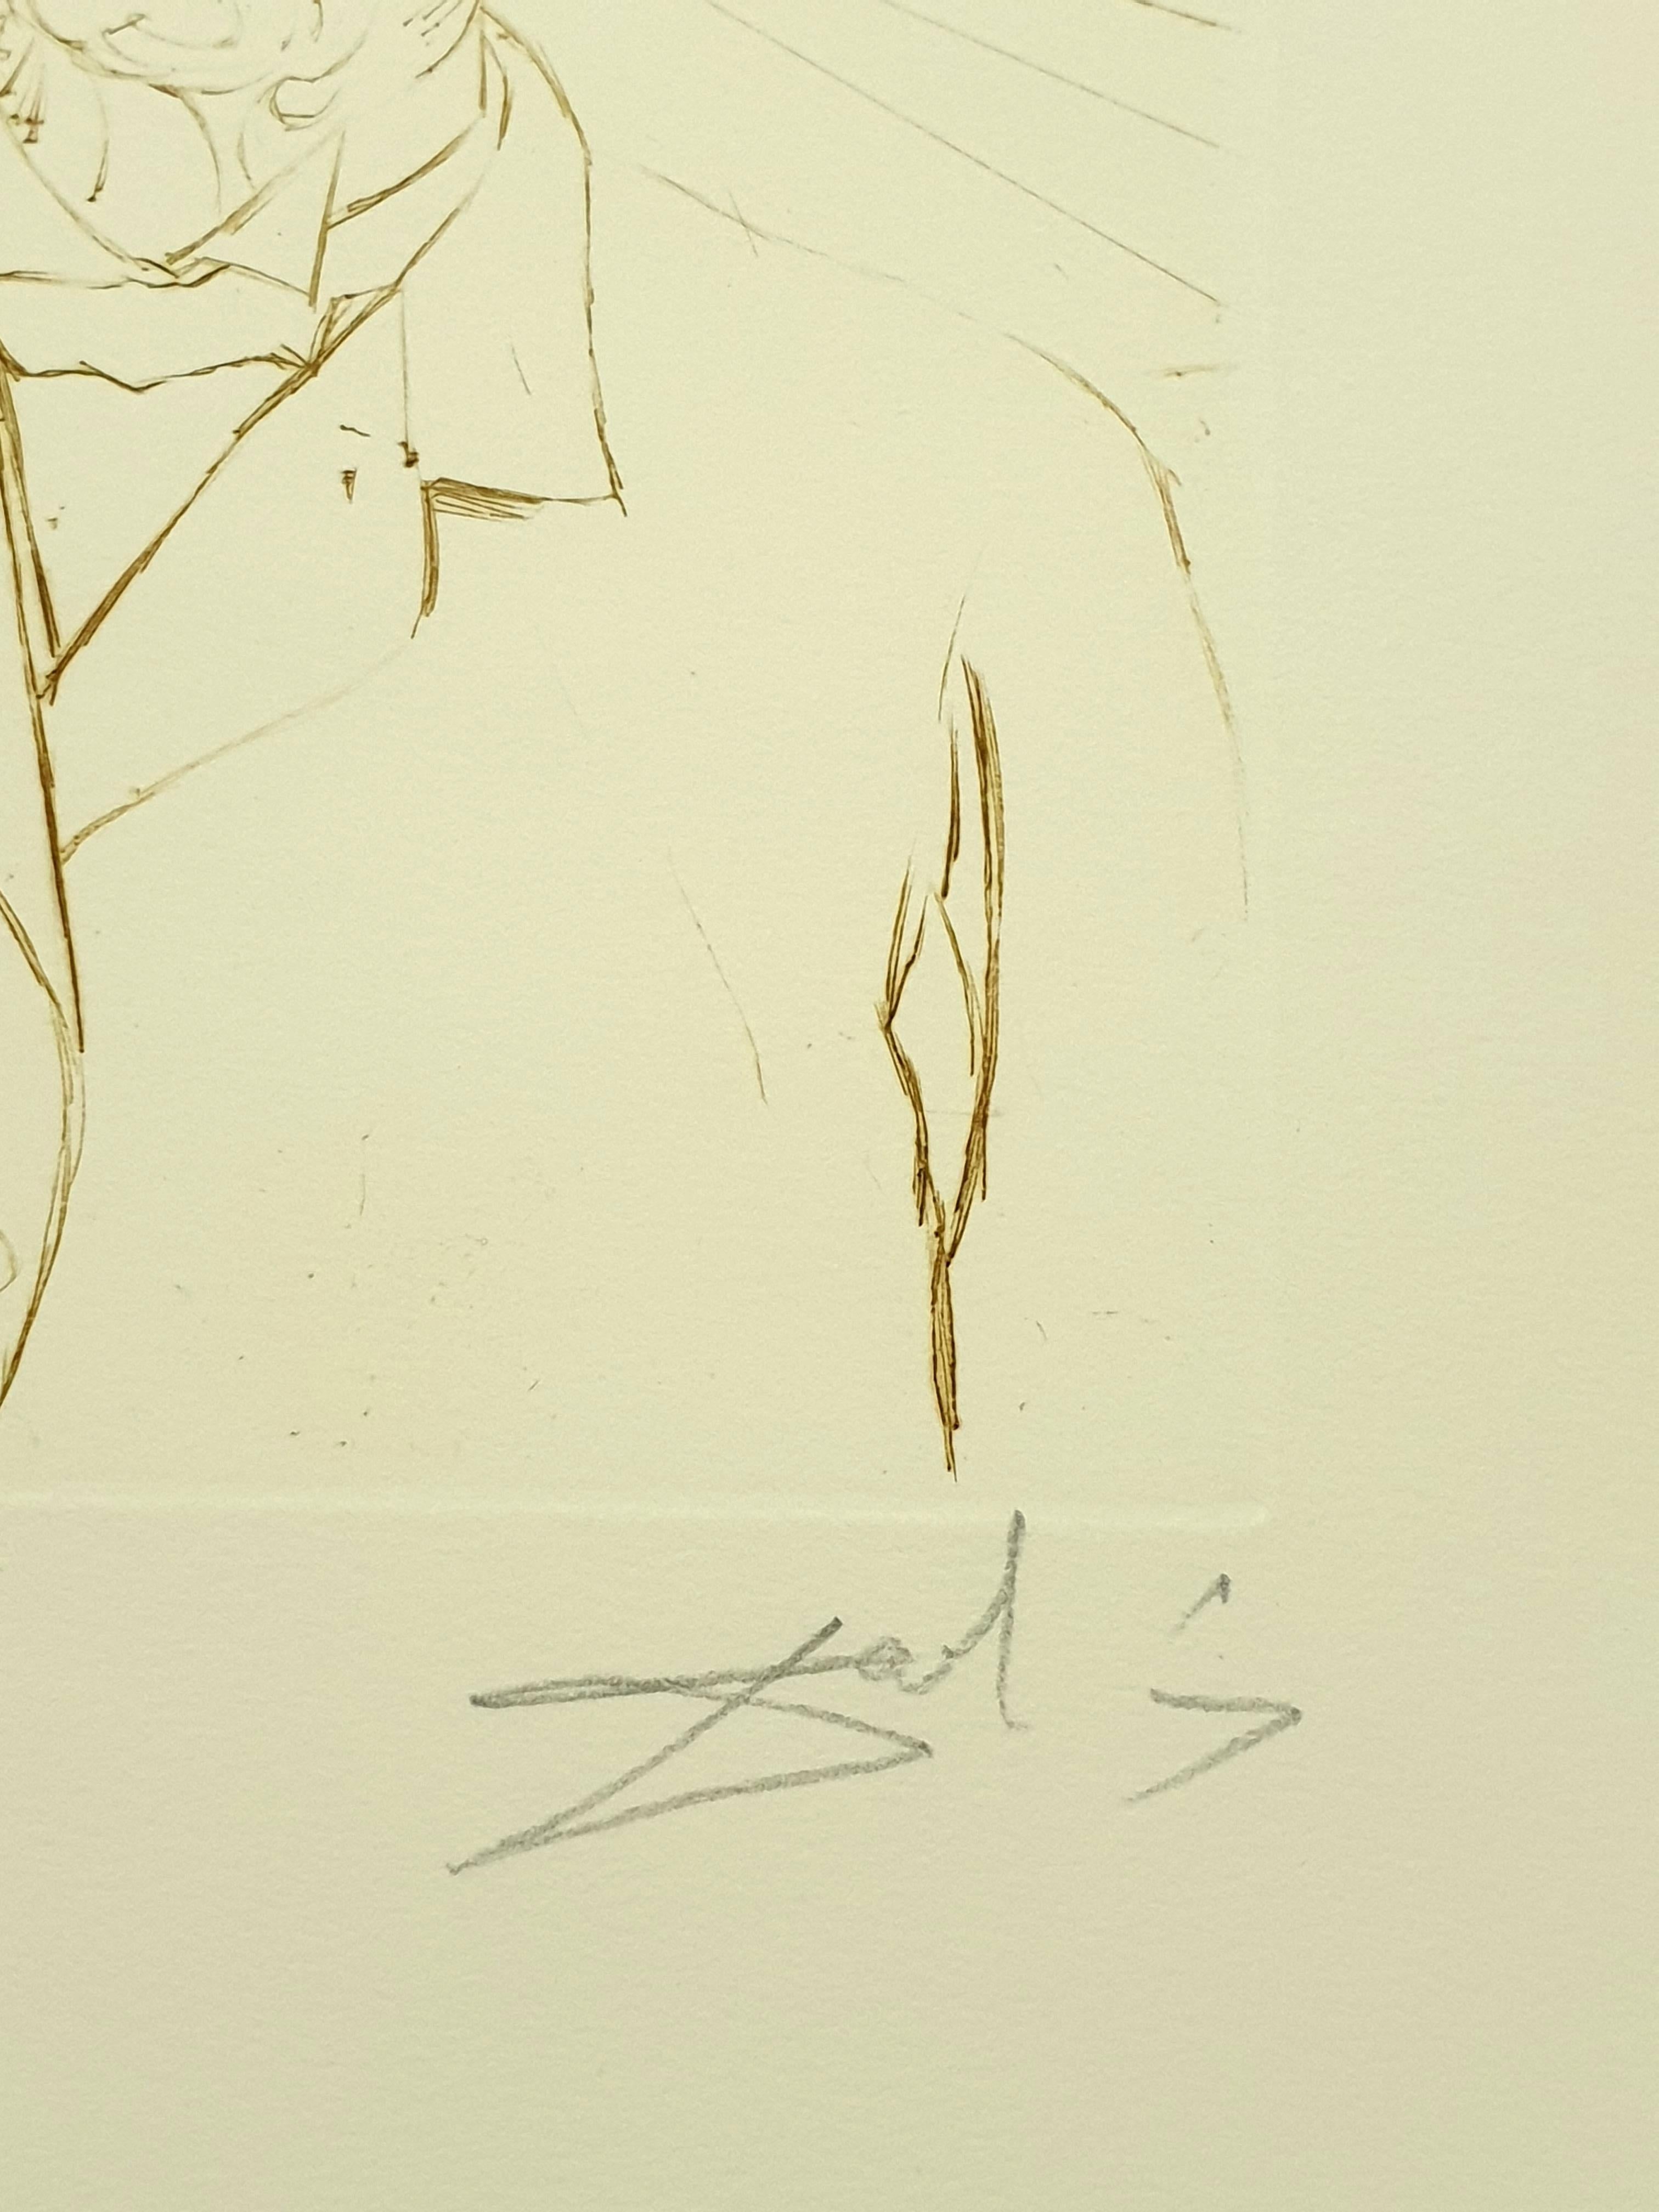 Salvador Dali - Albert Schweitzer - Original Handsigned Engraving
Dimensions: 17.5 x 12.5 cm
1970
Signed in pencil
EA
Jean Schneider, Basel
References : Field 70-5